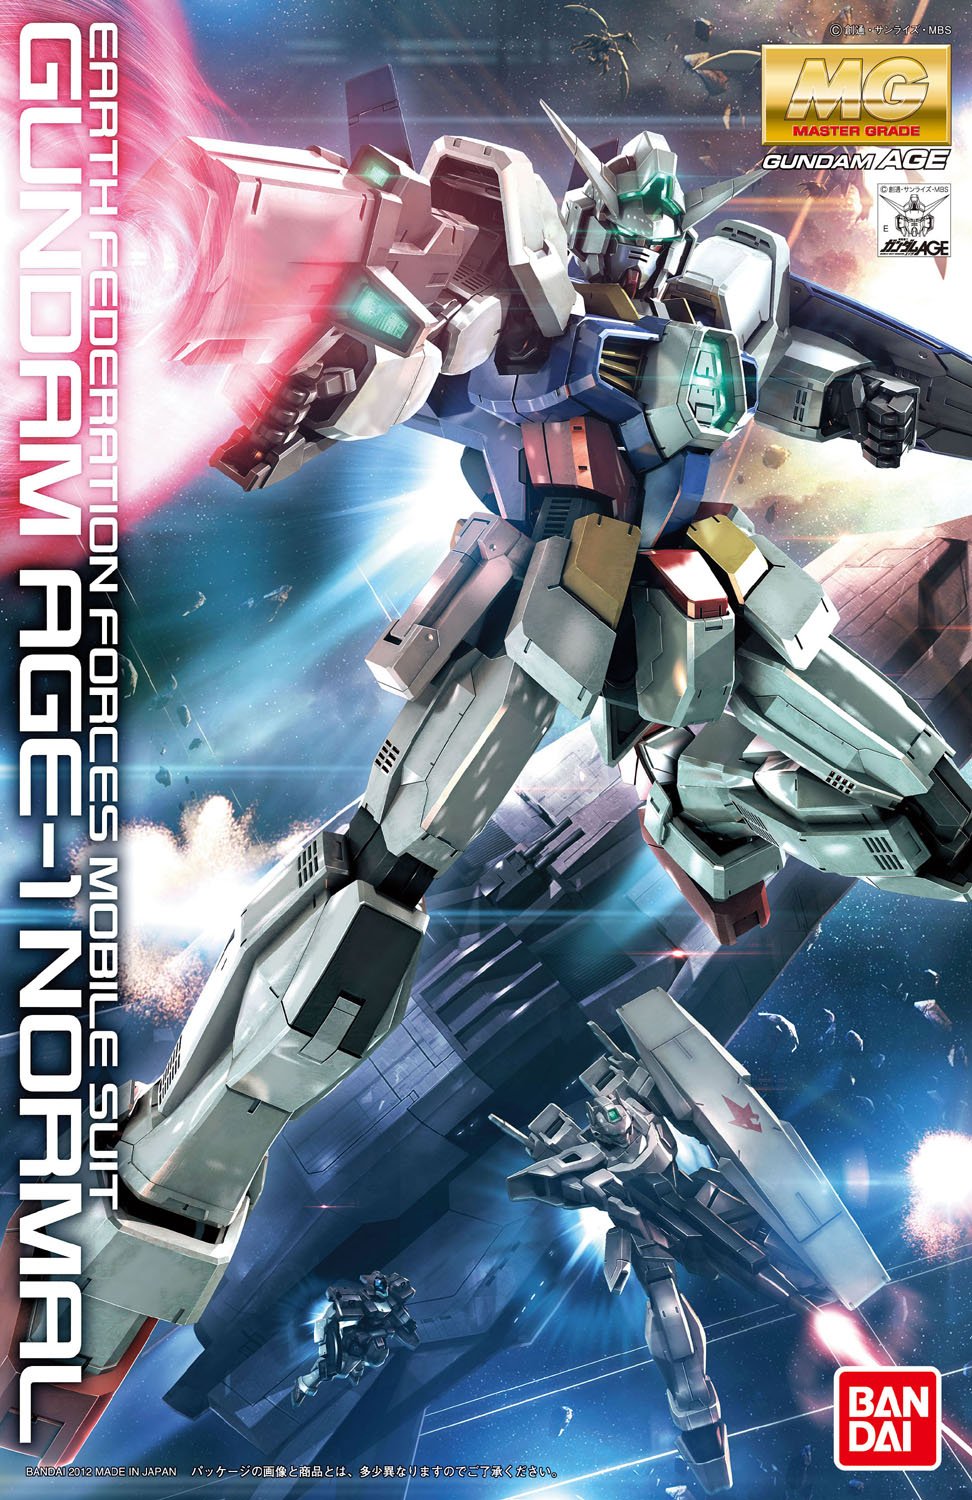 GUNDAM GUY: Mega Size 1/48 Gundam AGE-1 Normal - Review by Team GG